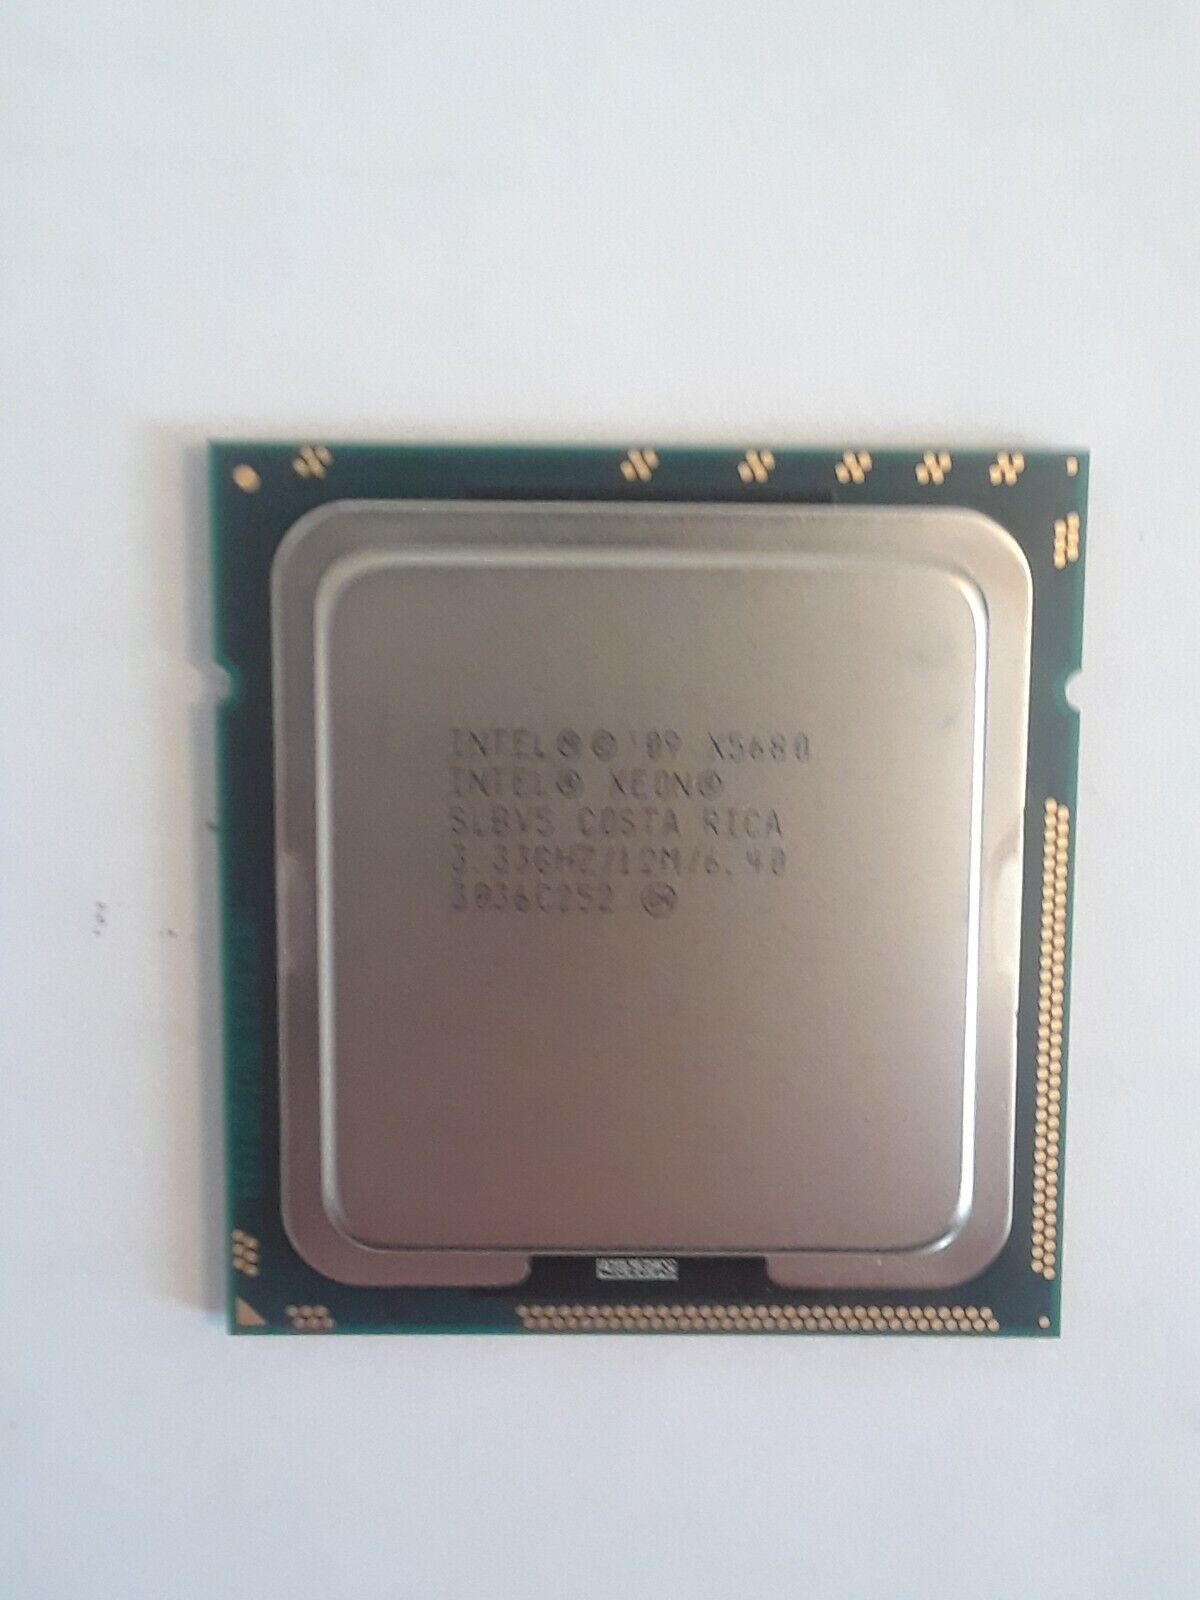 X5680 INTEL XEON SLBV5  6 CORE 3.33GHz 12MB 6.40GT/s 130W CPU